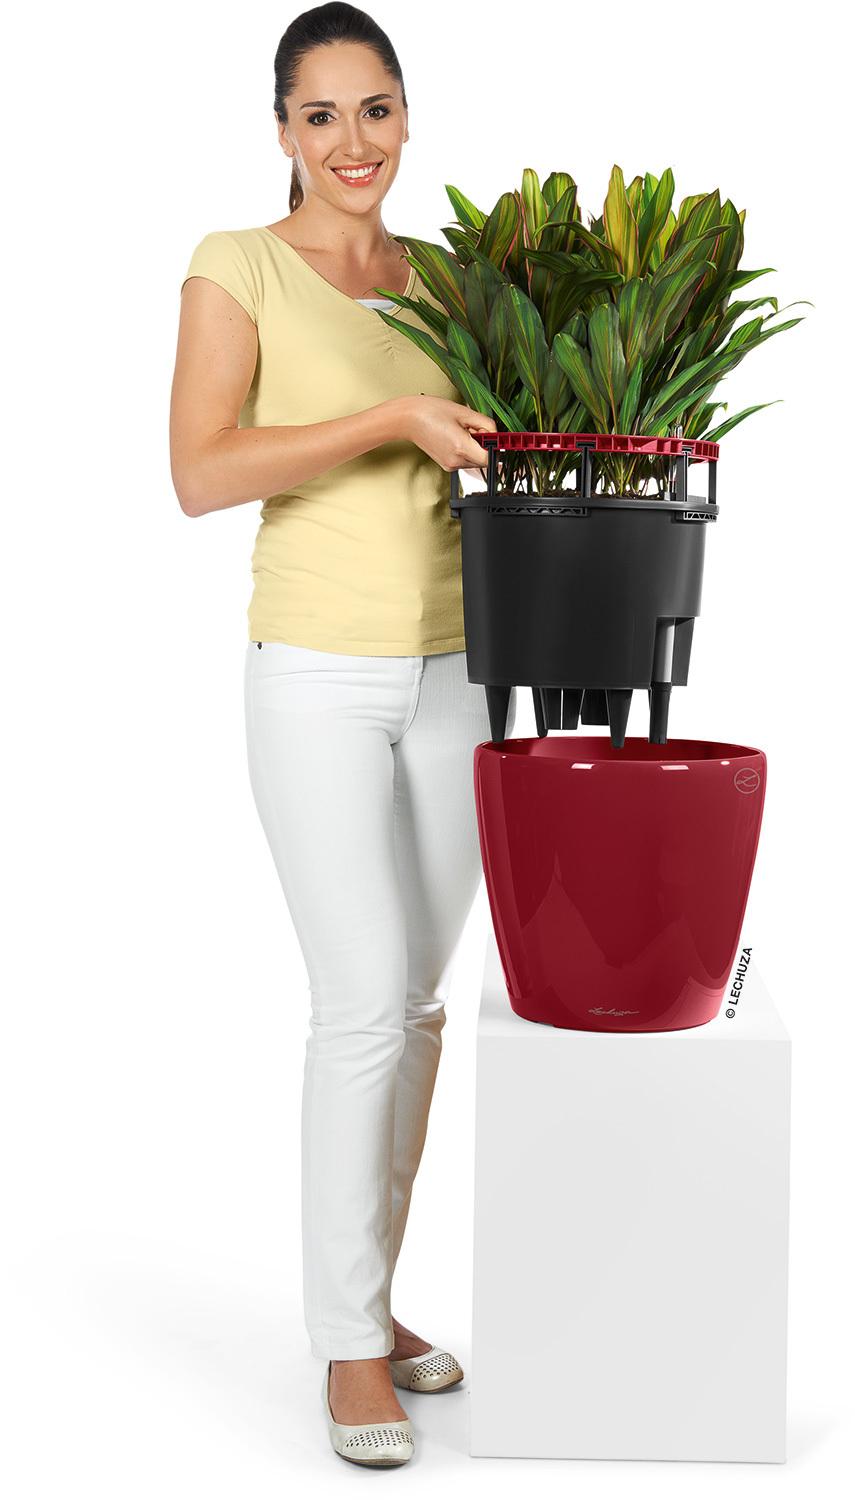 CLASSICO LS planter, 35/33 cm, scarlet red